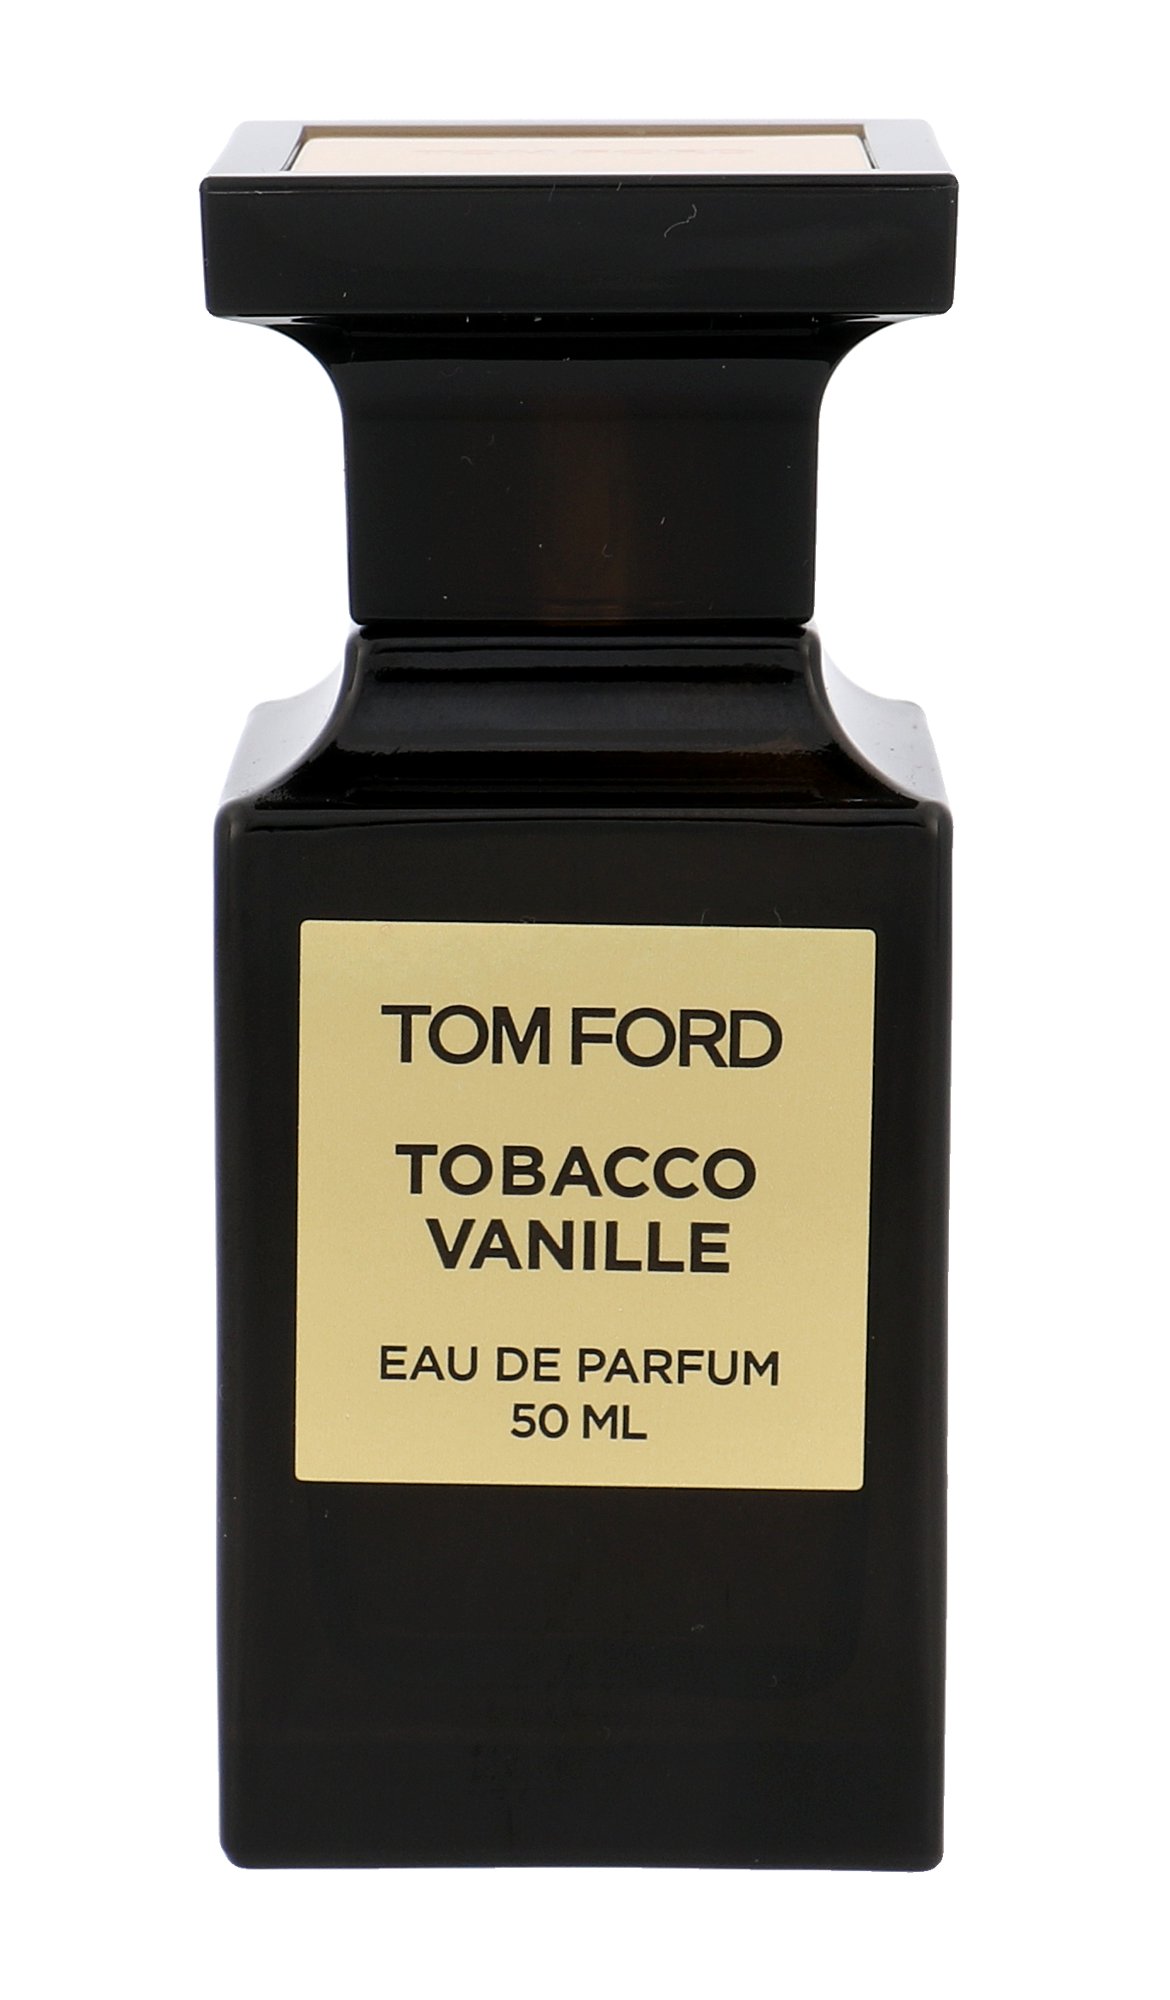 TOM FORD Tobacco Vanille, edp 50ml - Teszter